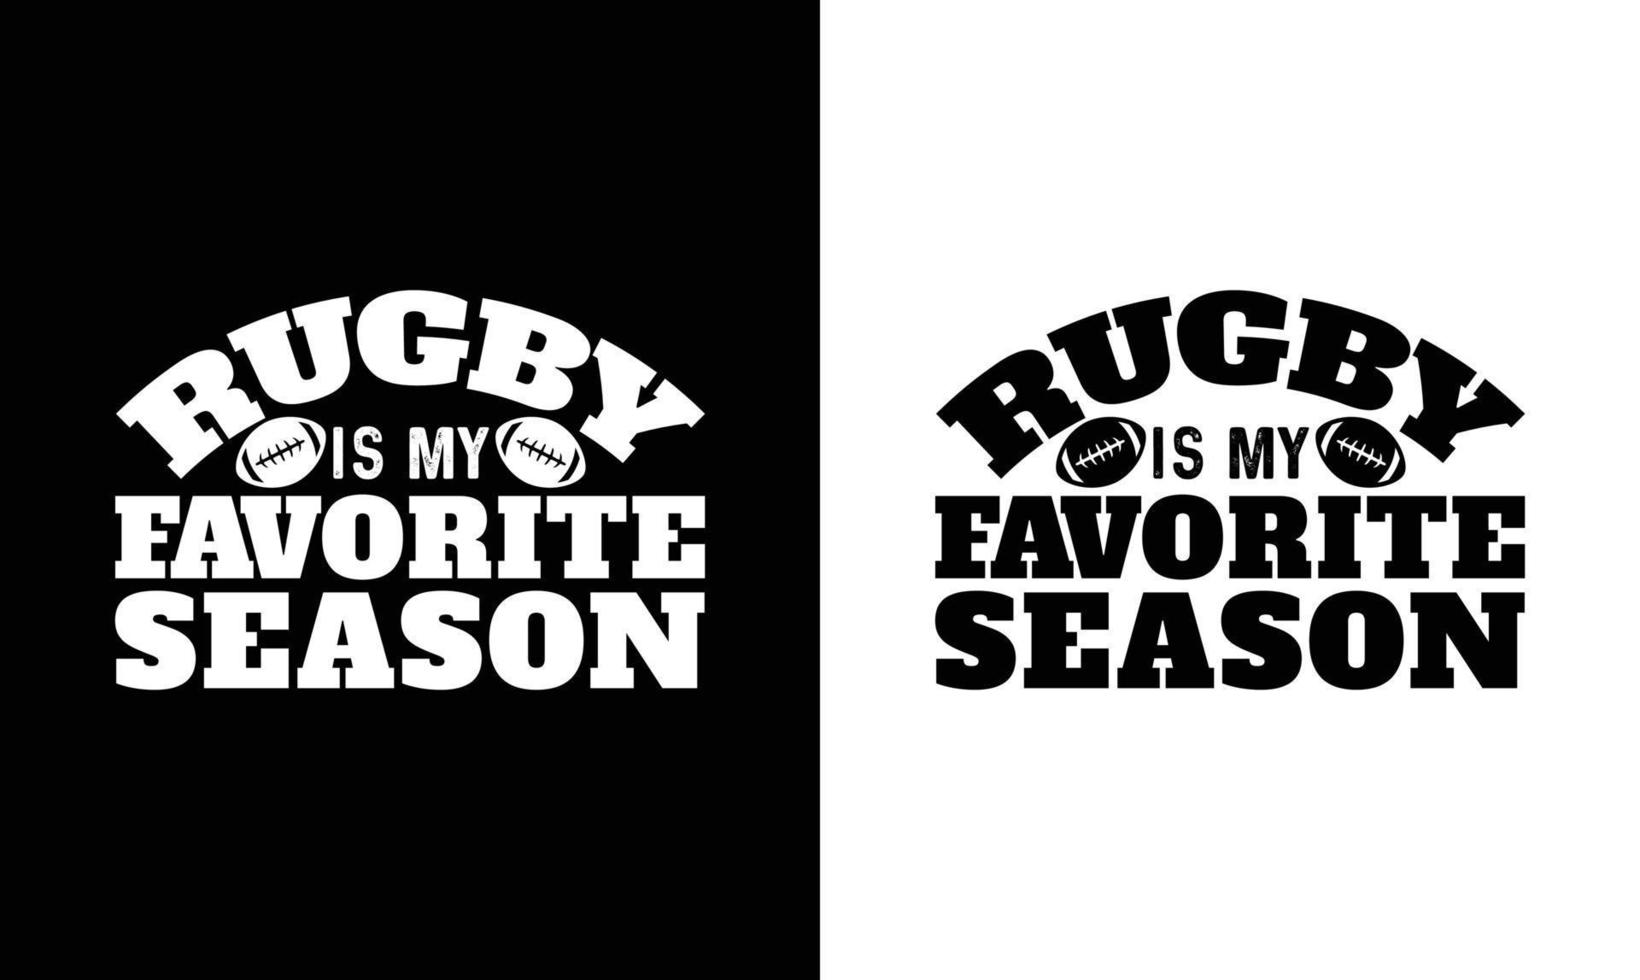 design de camiseta de futebol americano, design de camiseta de rugby vetor